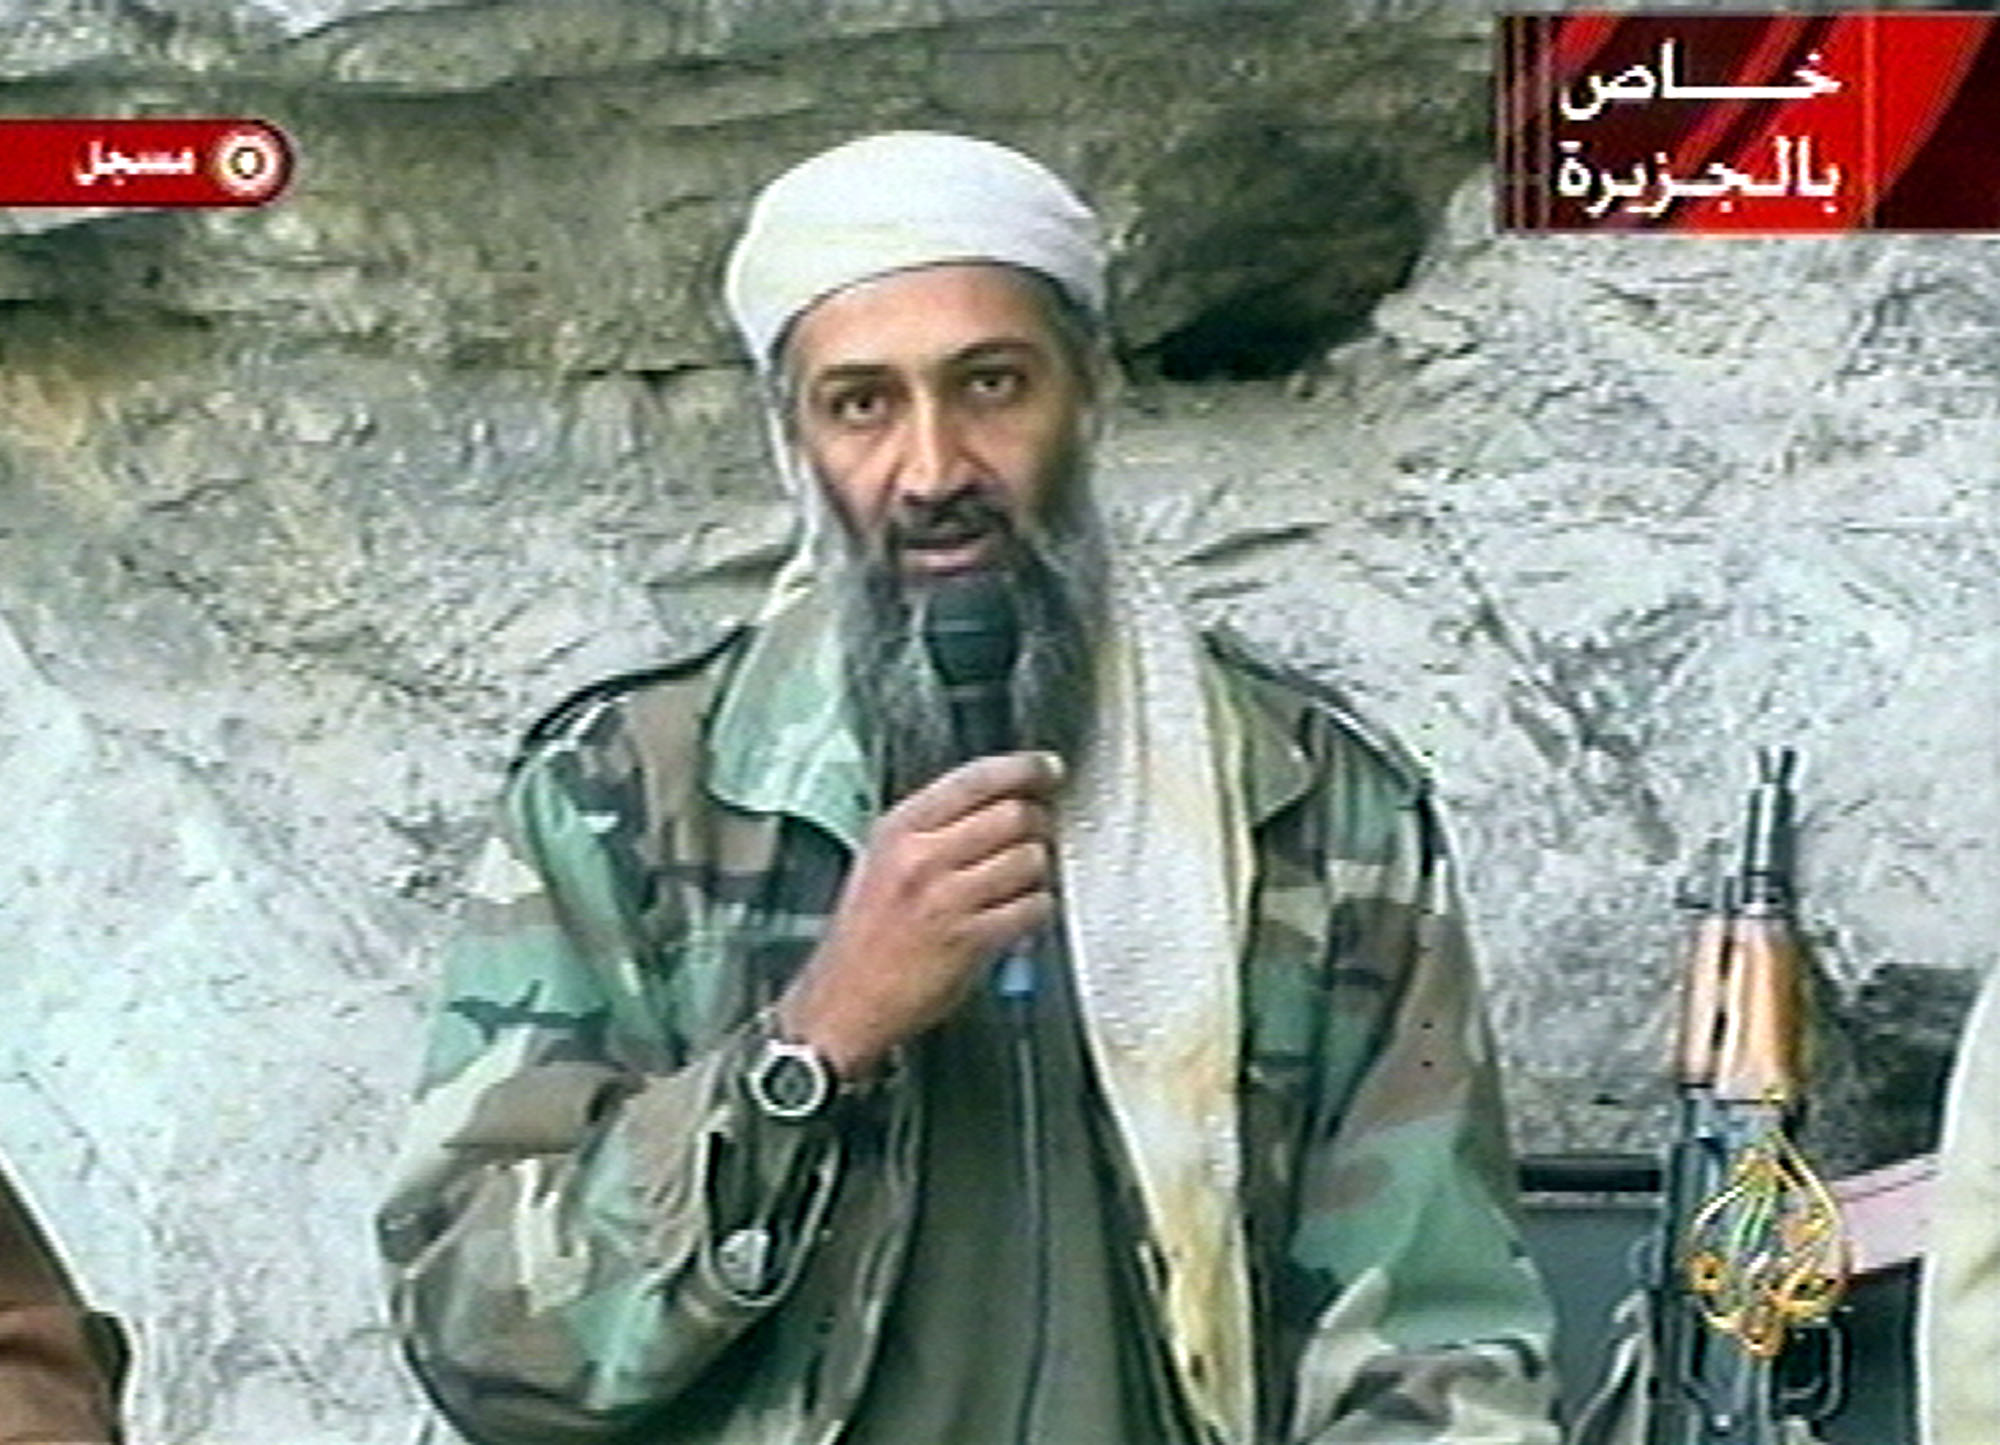 March 10, 1957: Osama bin Laden Is Born